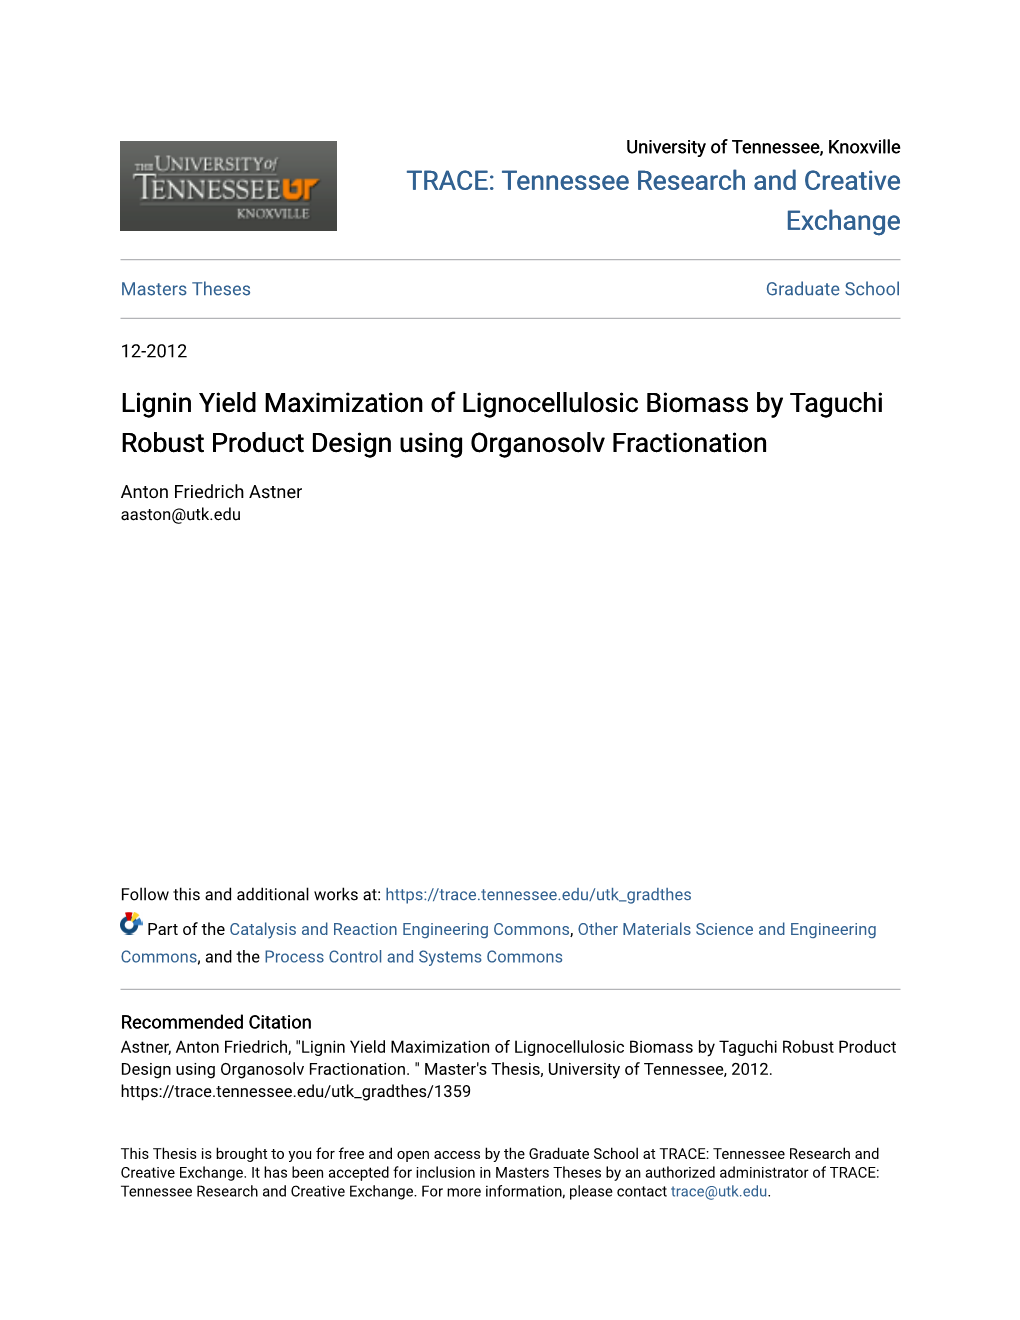 Lignin Yield Maximization of Lignocellulosic Biomass by Taguchi Robust Product Design Using Organosolv Fractionation